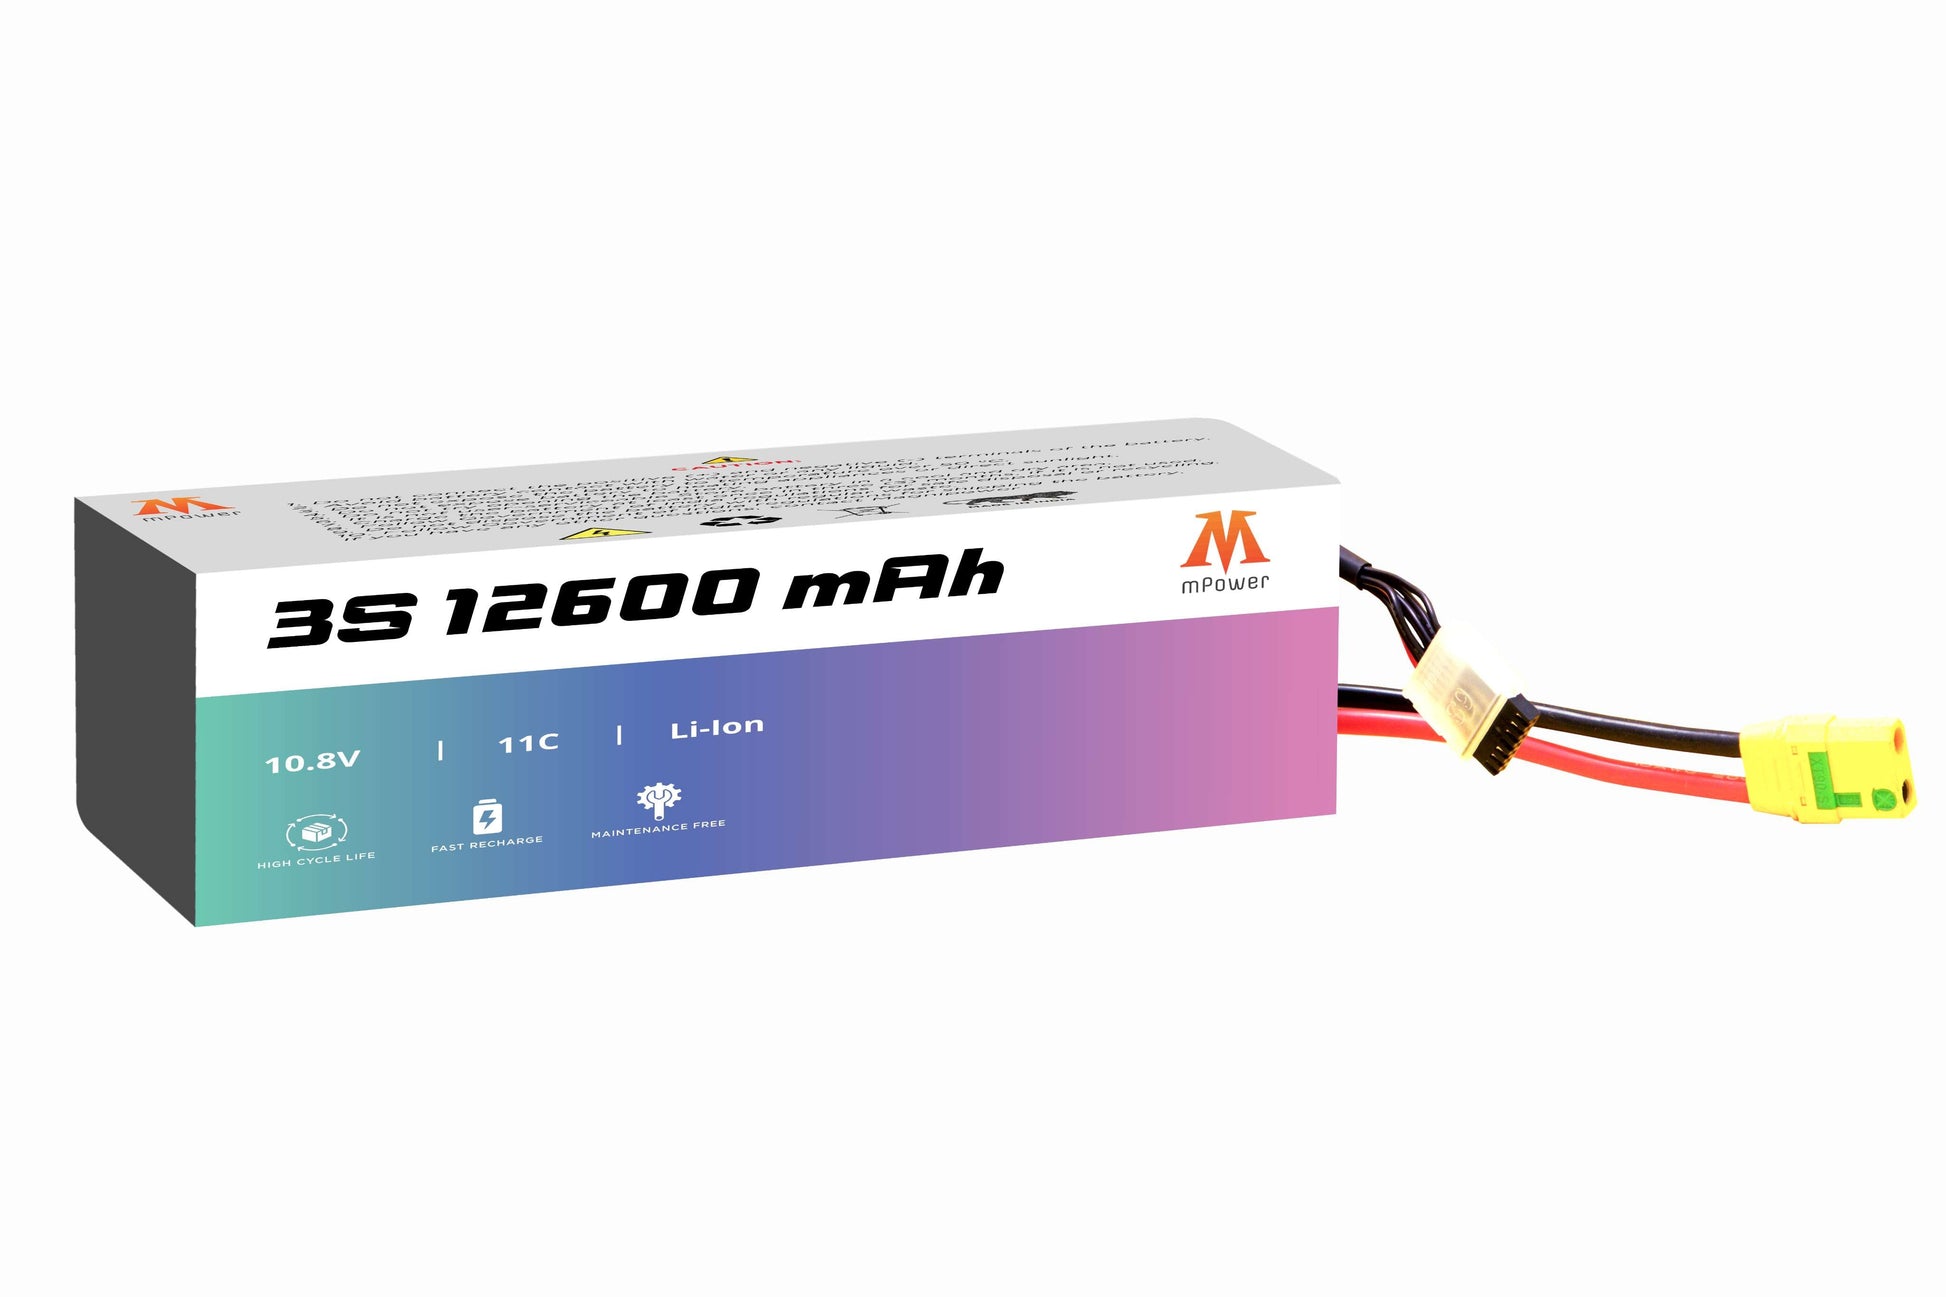 mPower 3S 12600mAh Lithium-Ion Battery for Surveillance Drones-mpowerlithium